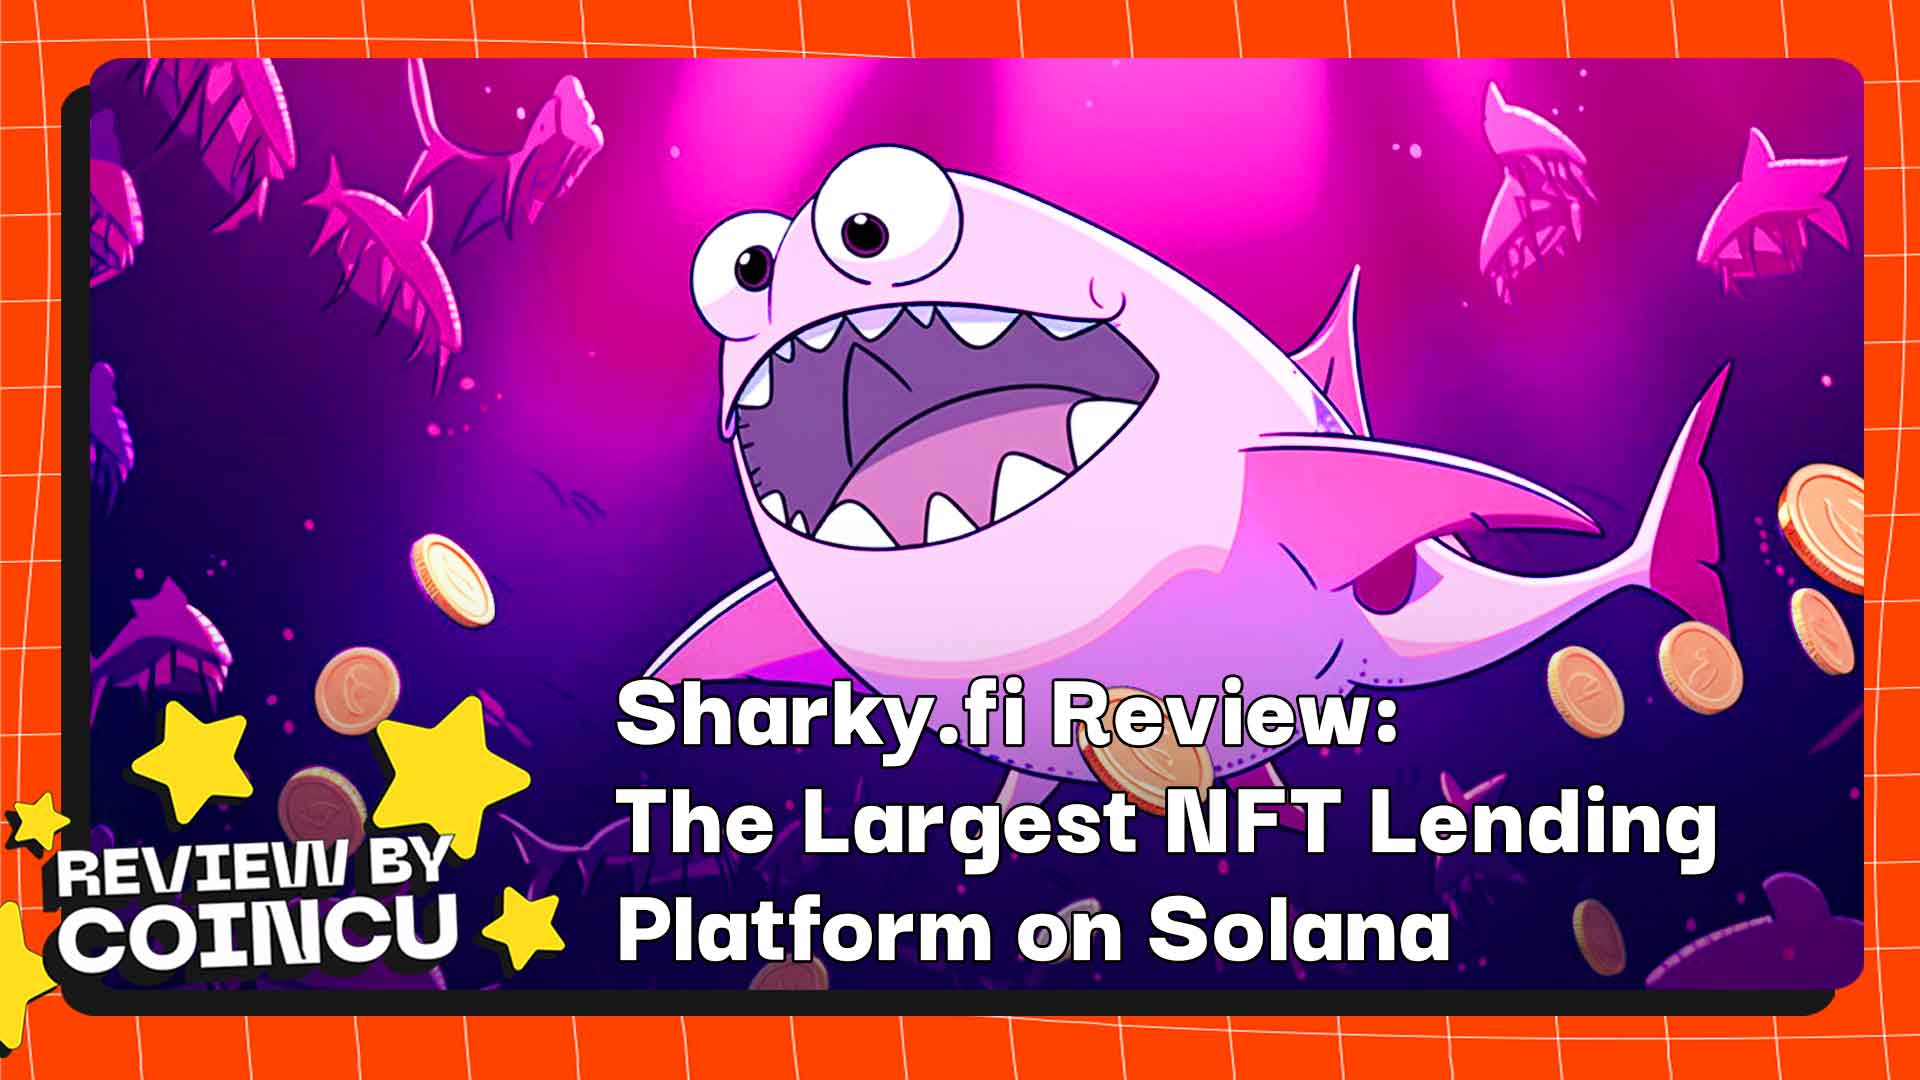 Sharky.fi Review: The Largest NFT Lending Platform on Solana